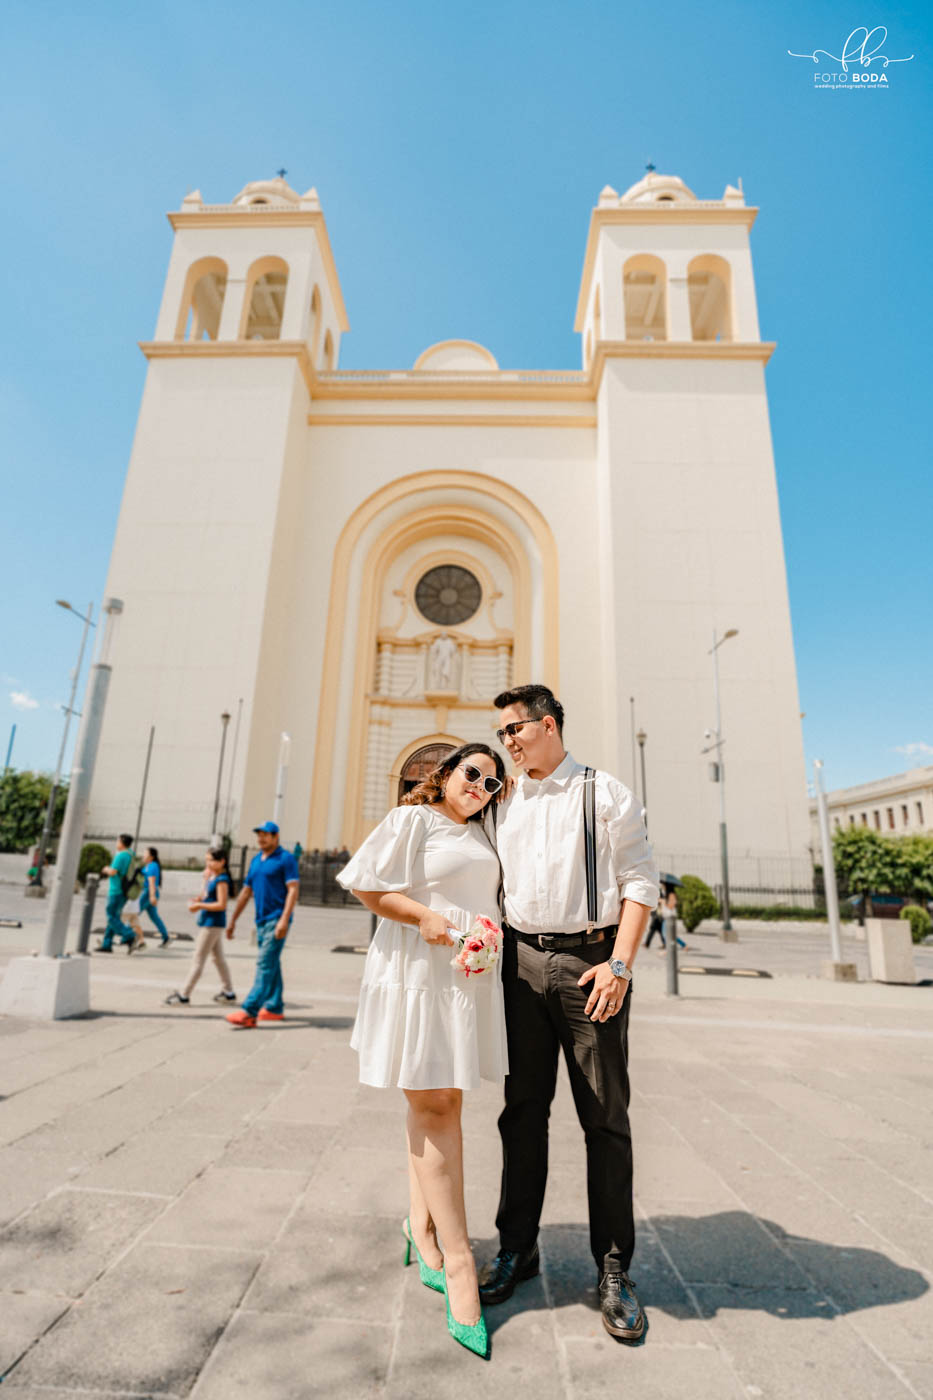 Fotografía de sesión pre boda de pareja en Centro histórico de san salvador